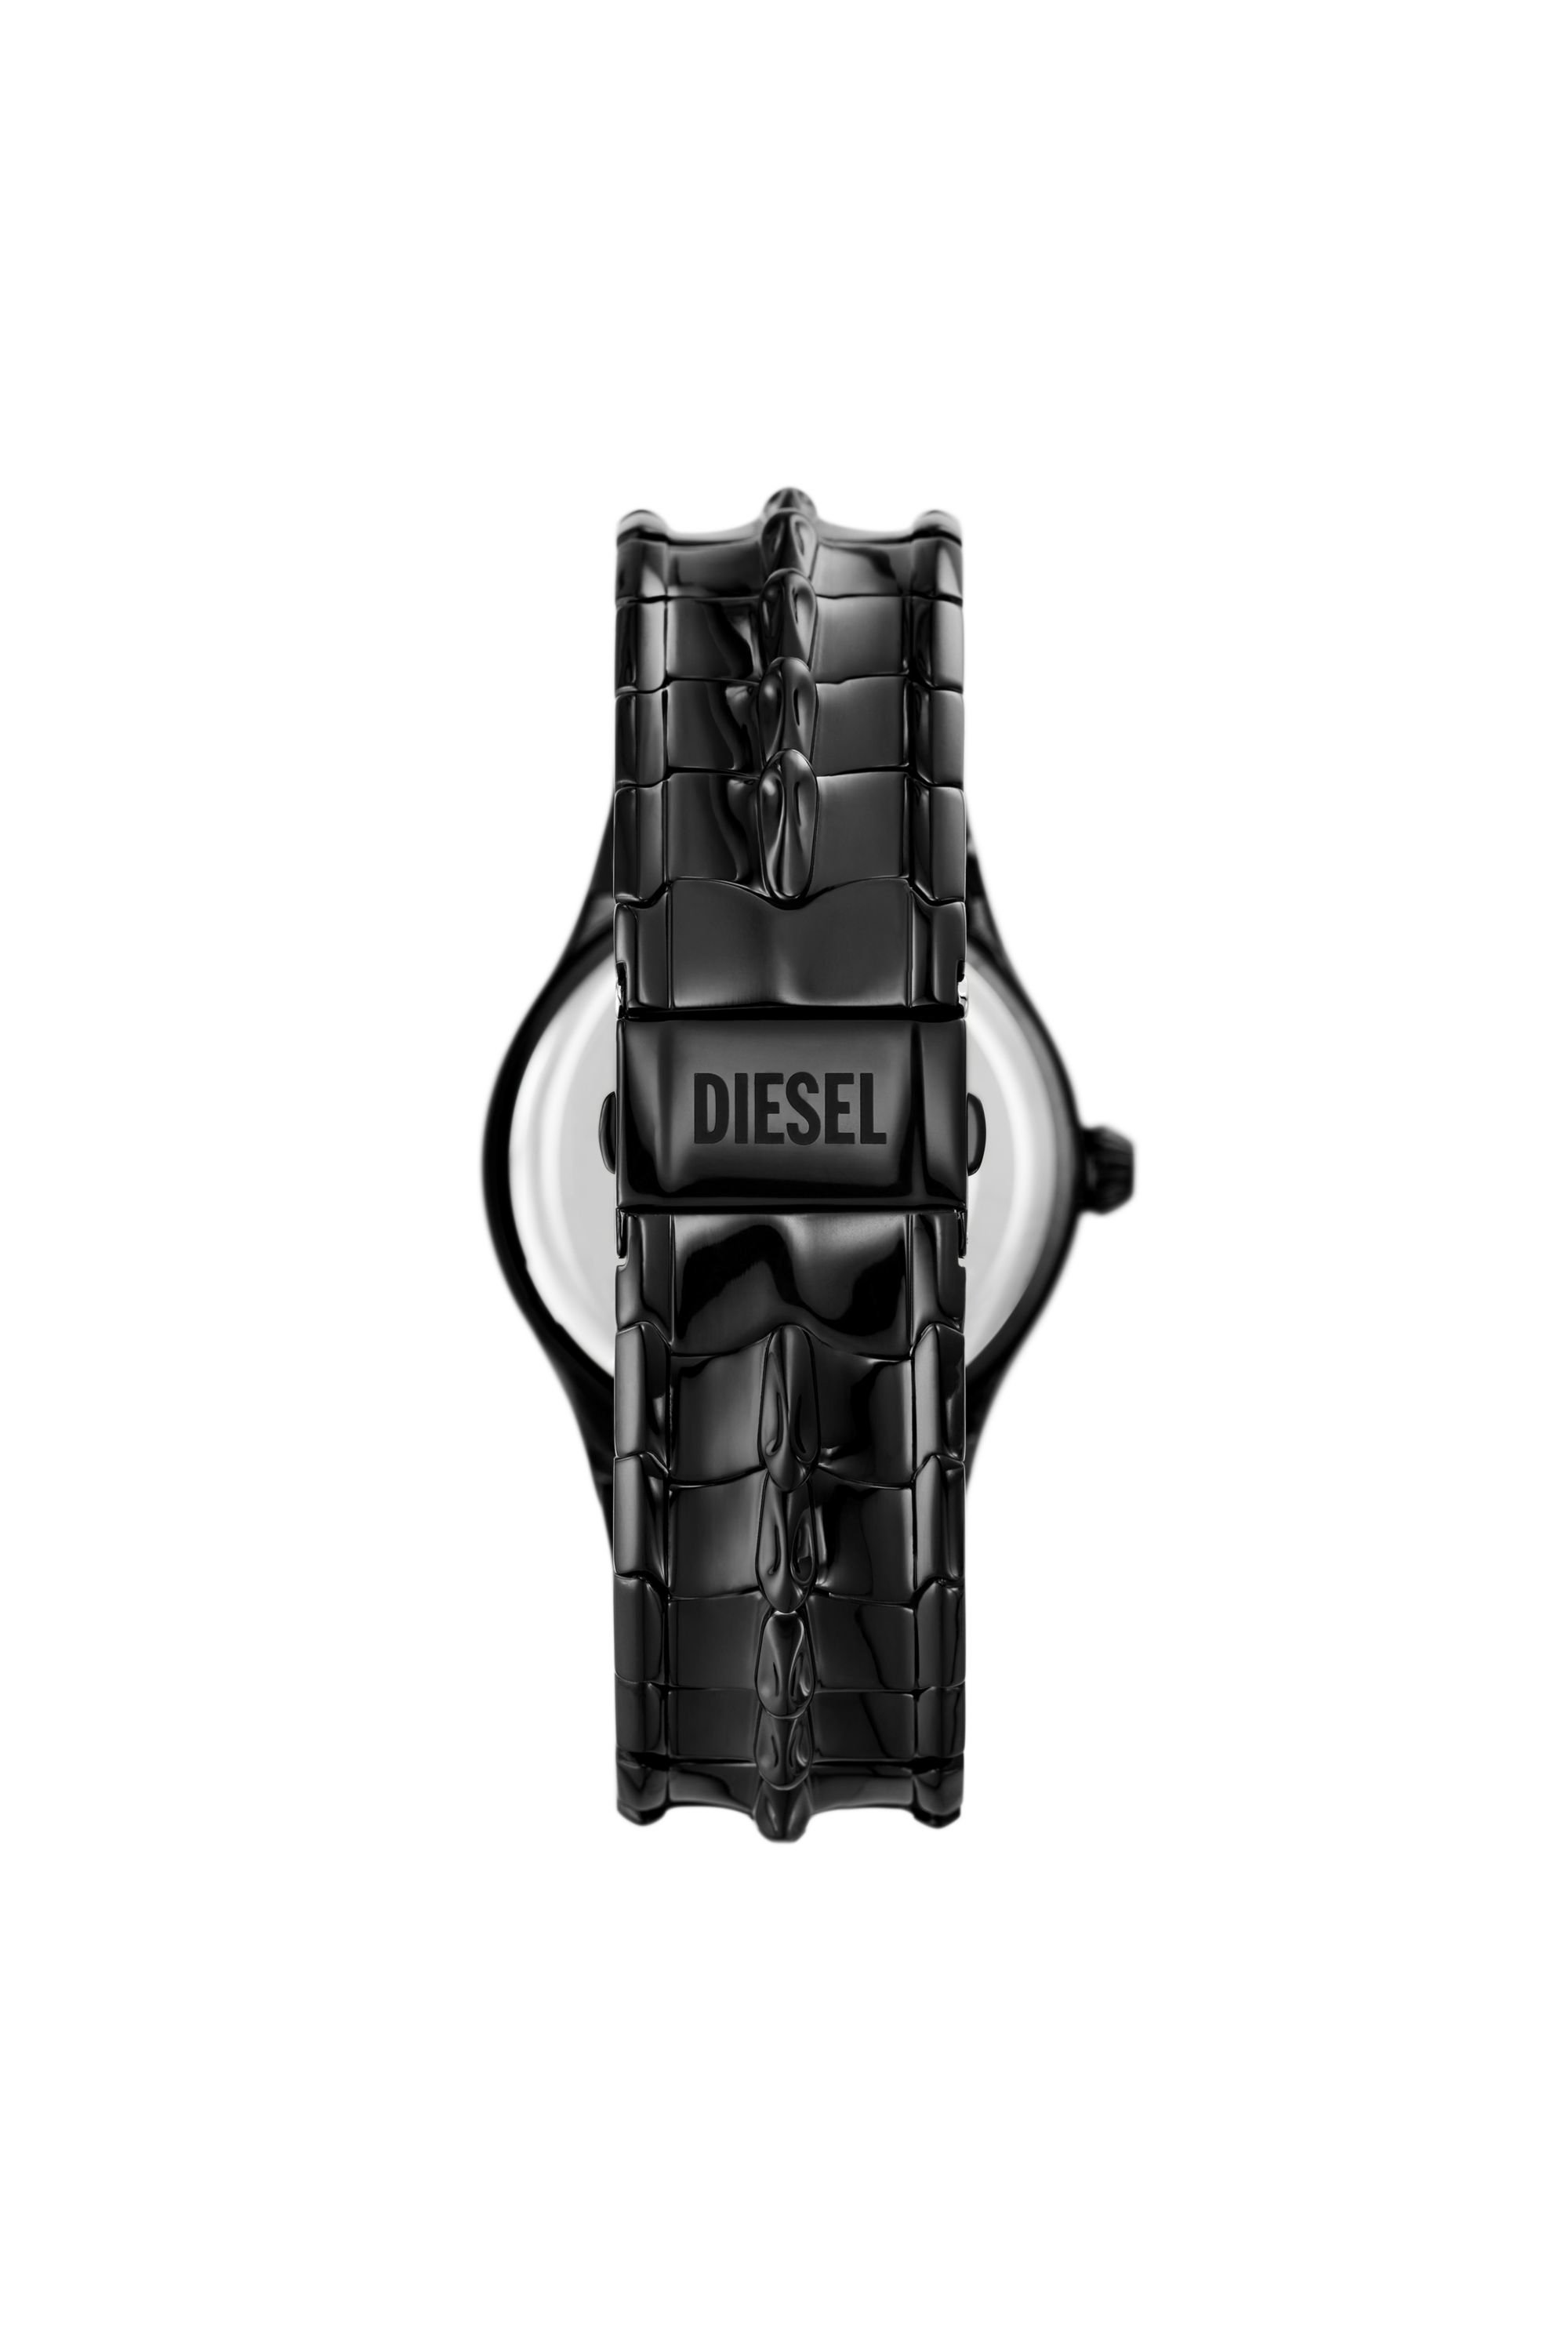 Diesel - DZ2198, Black - Image 3